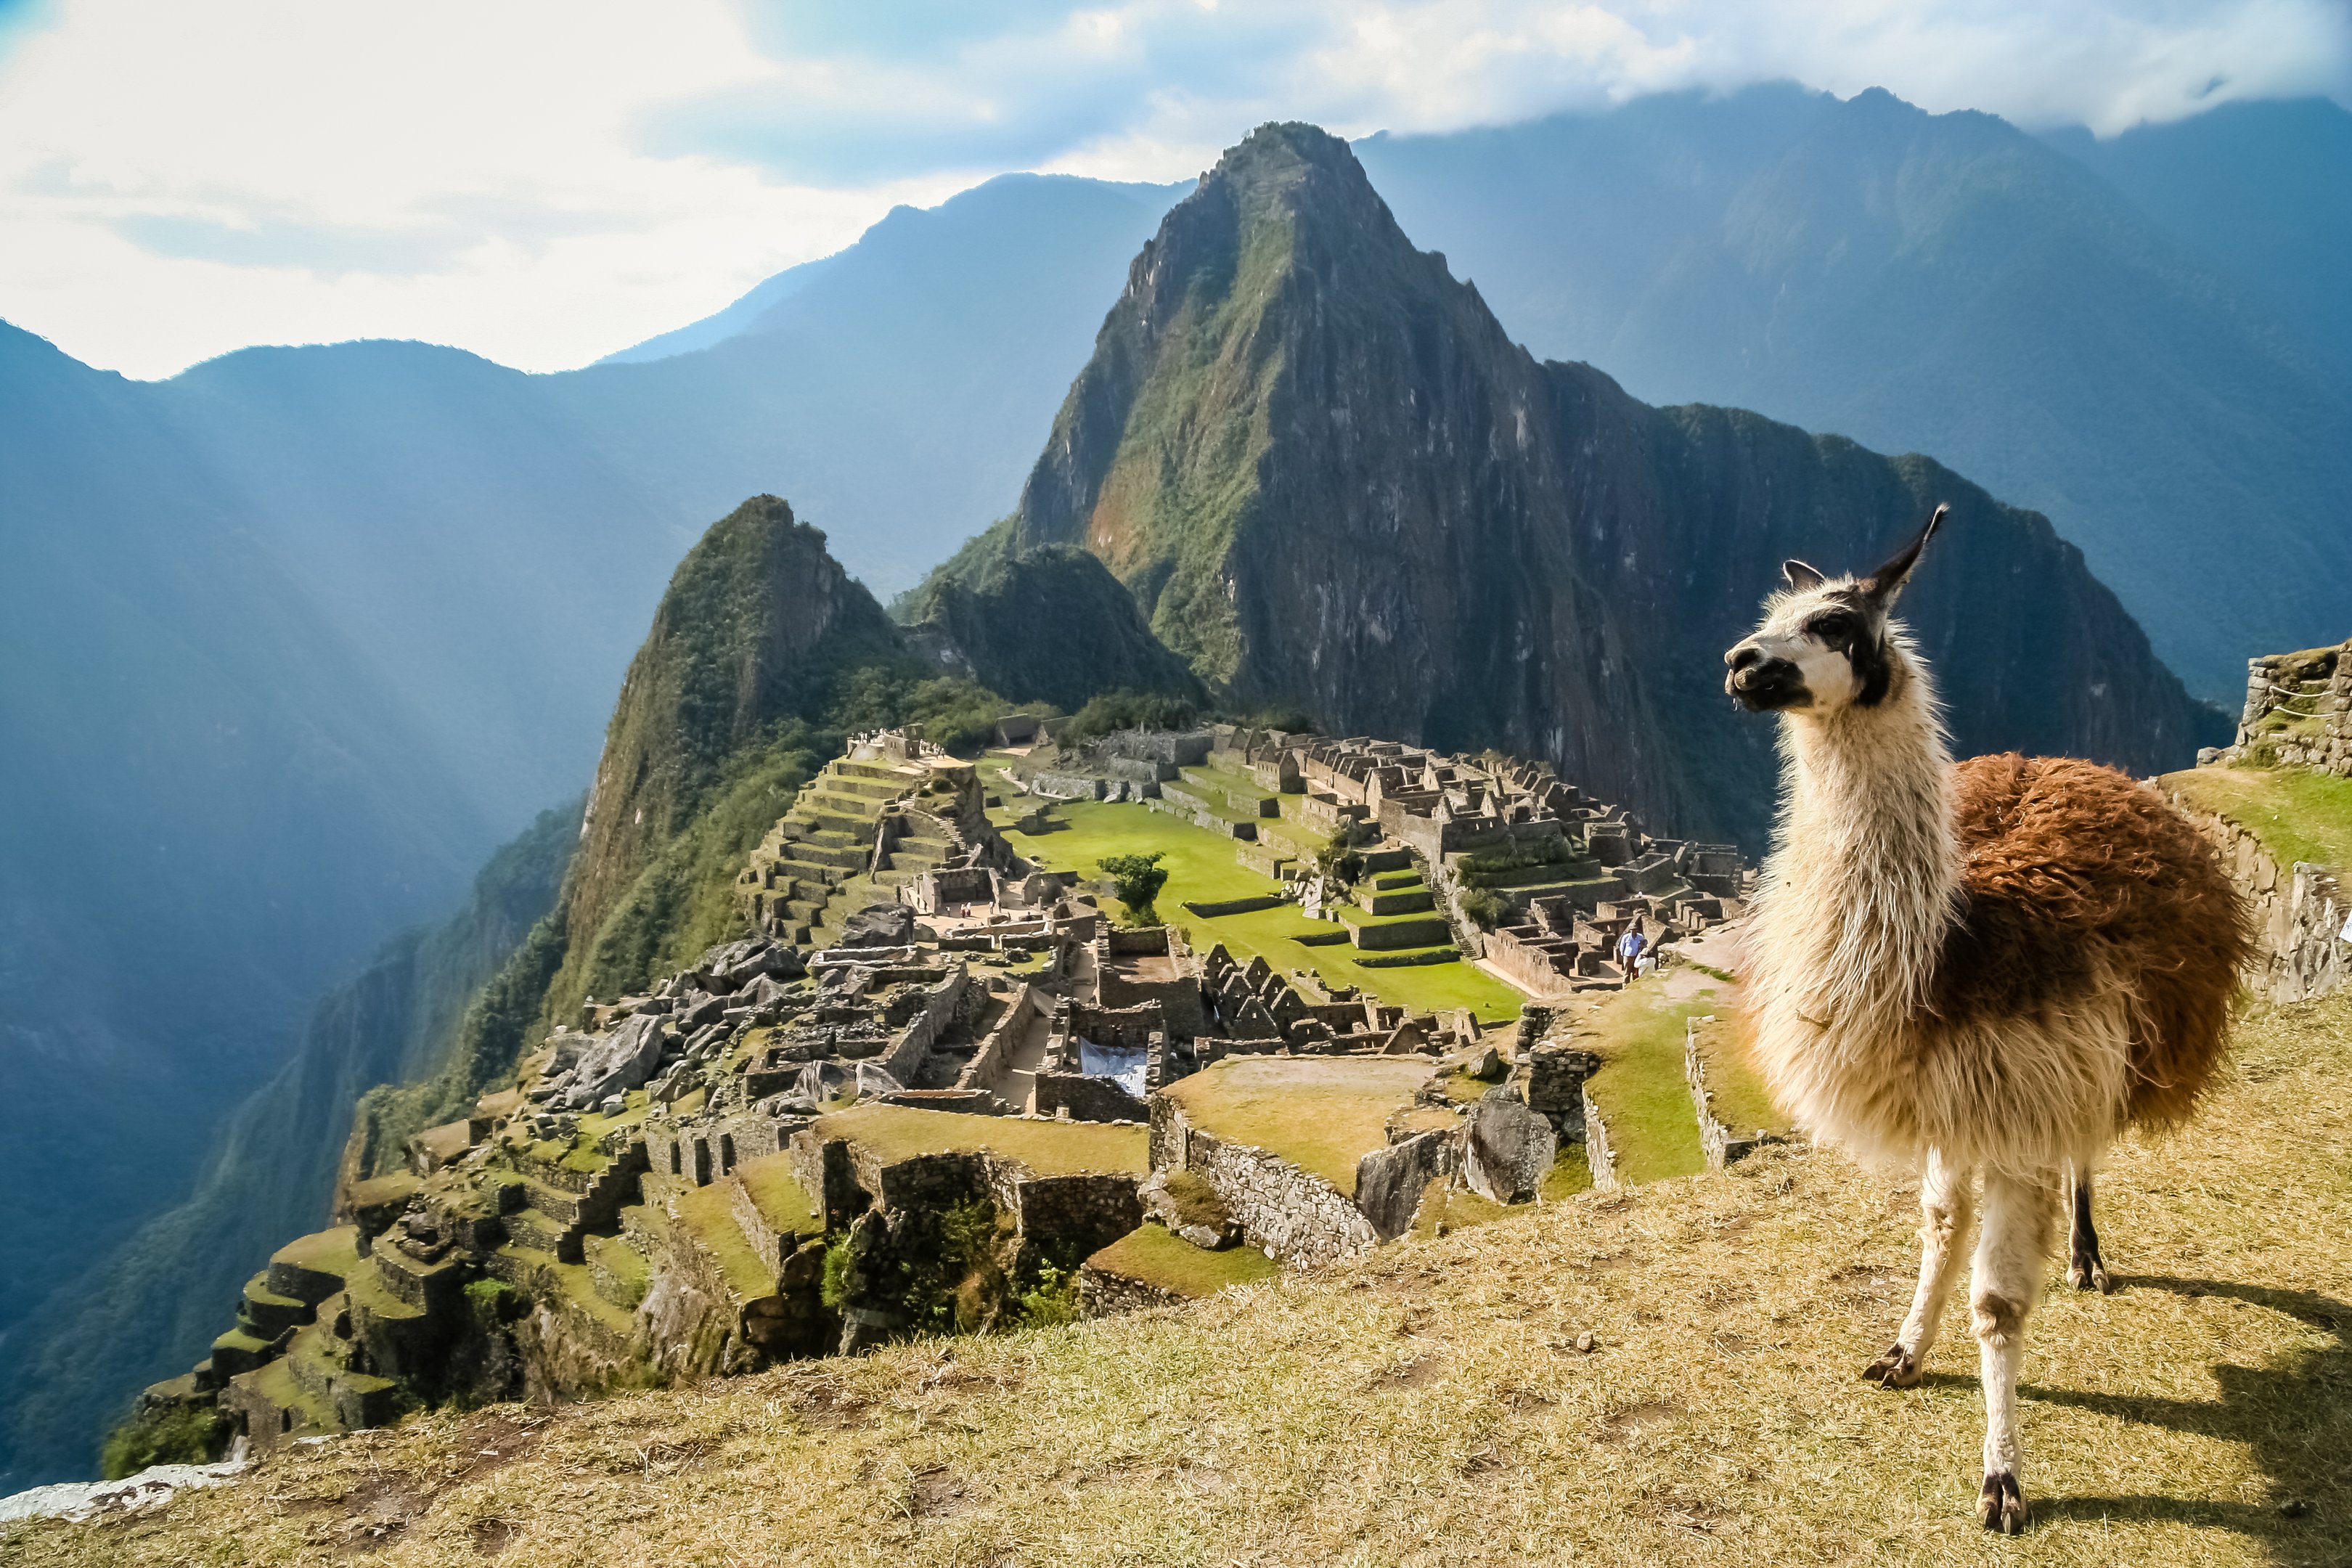 Peru  Terra de Ninguém